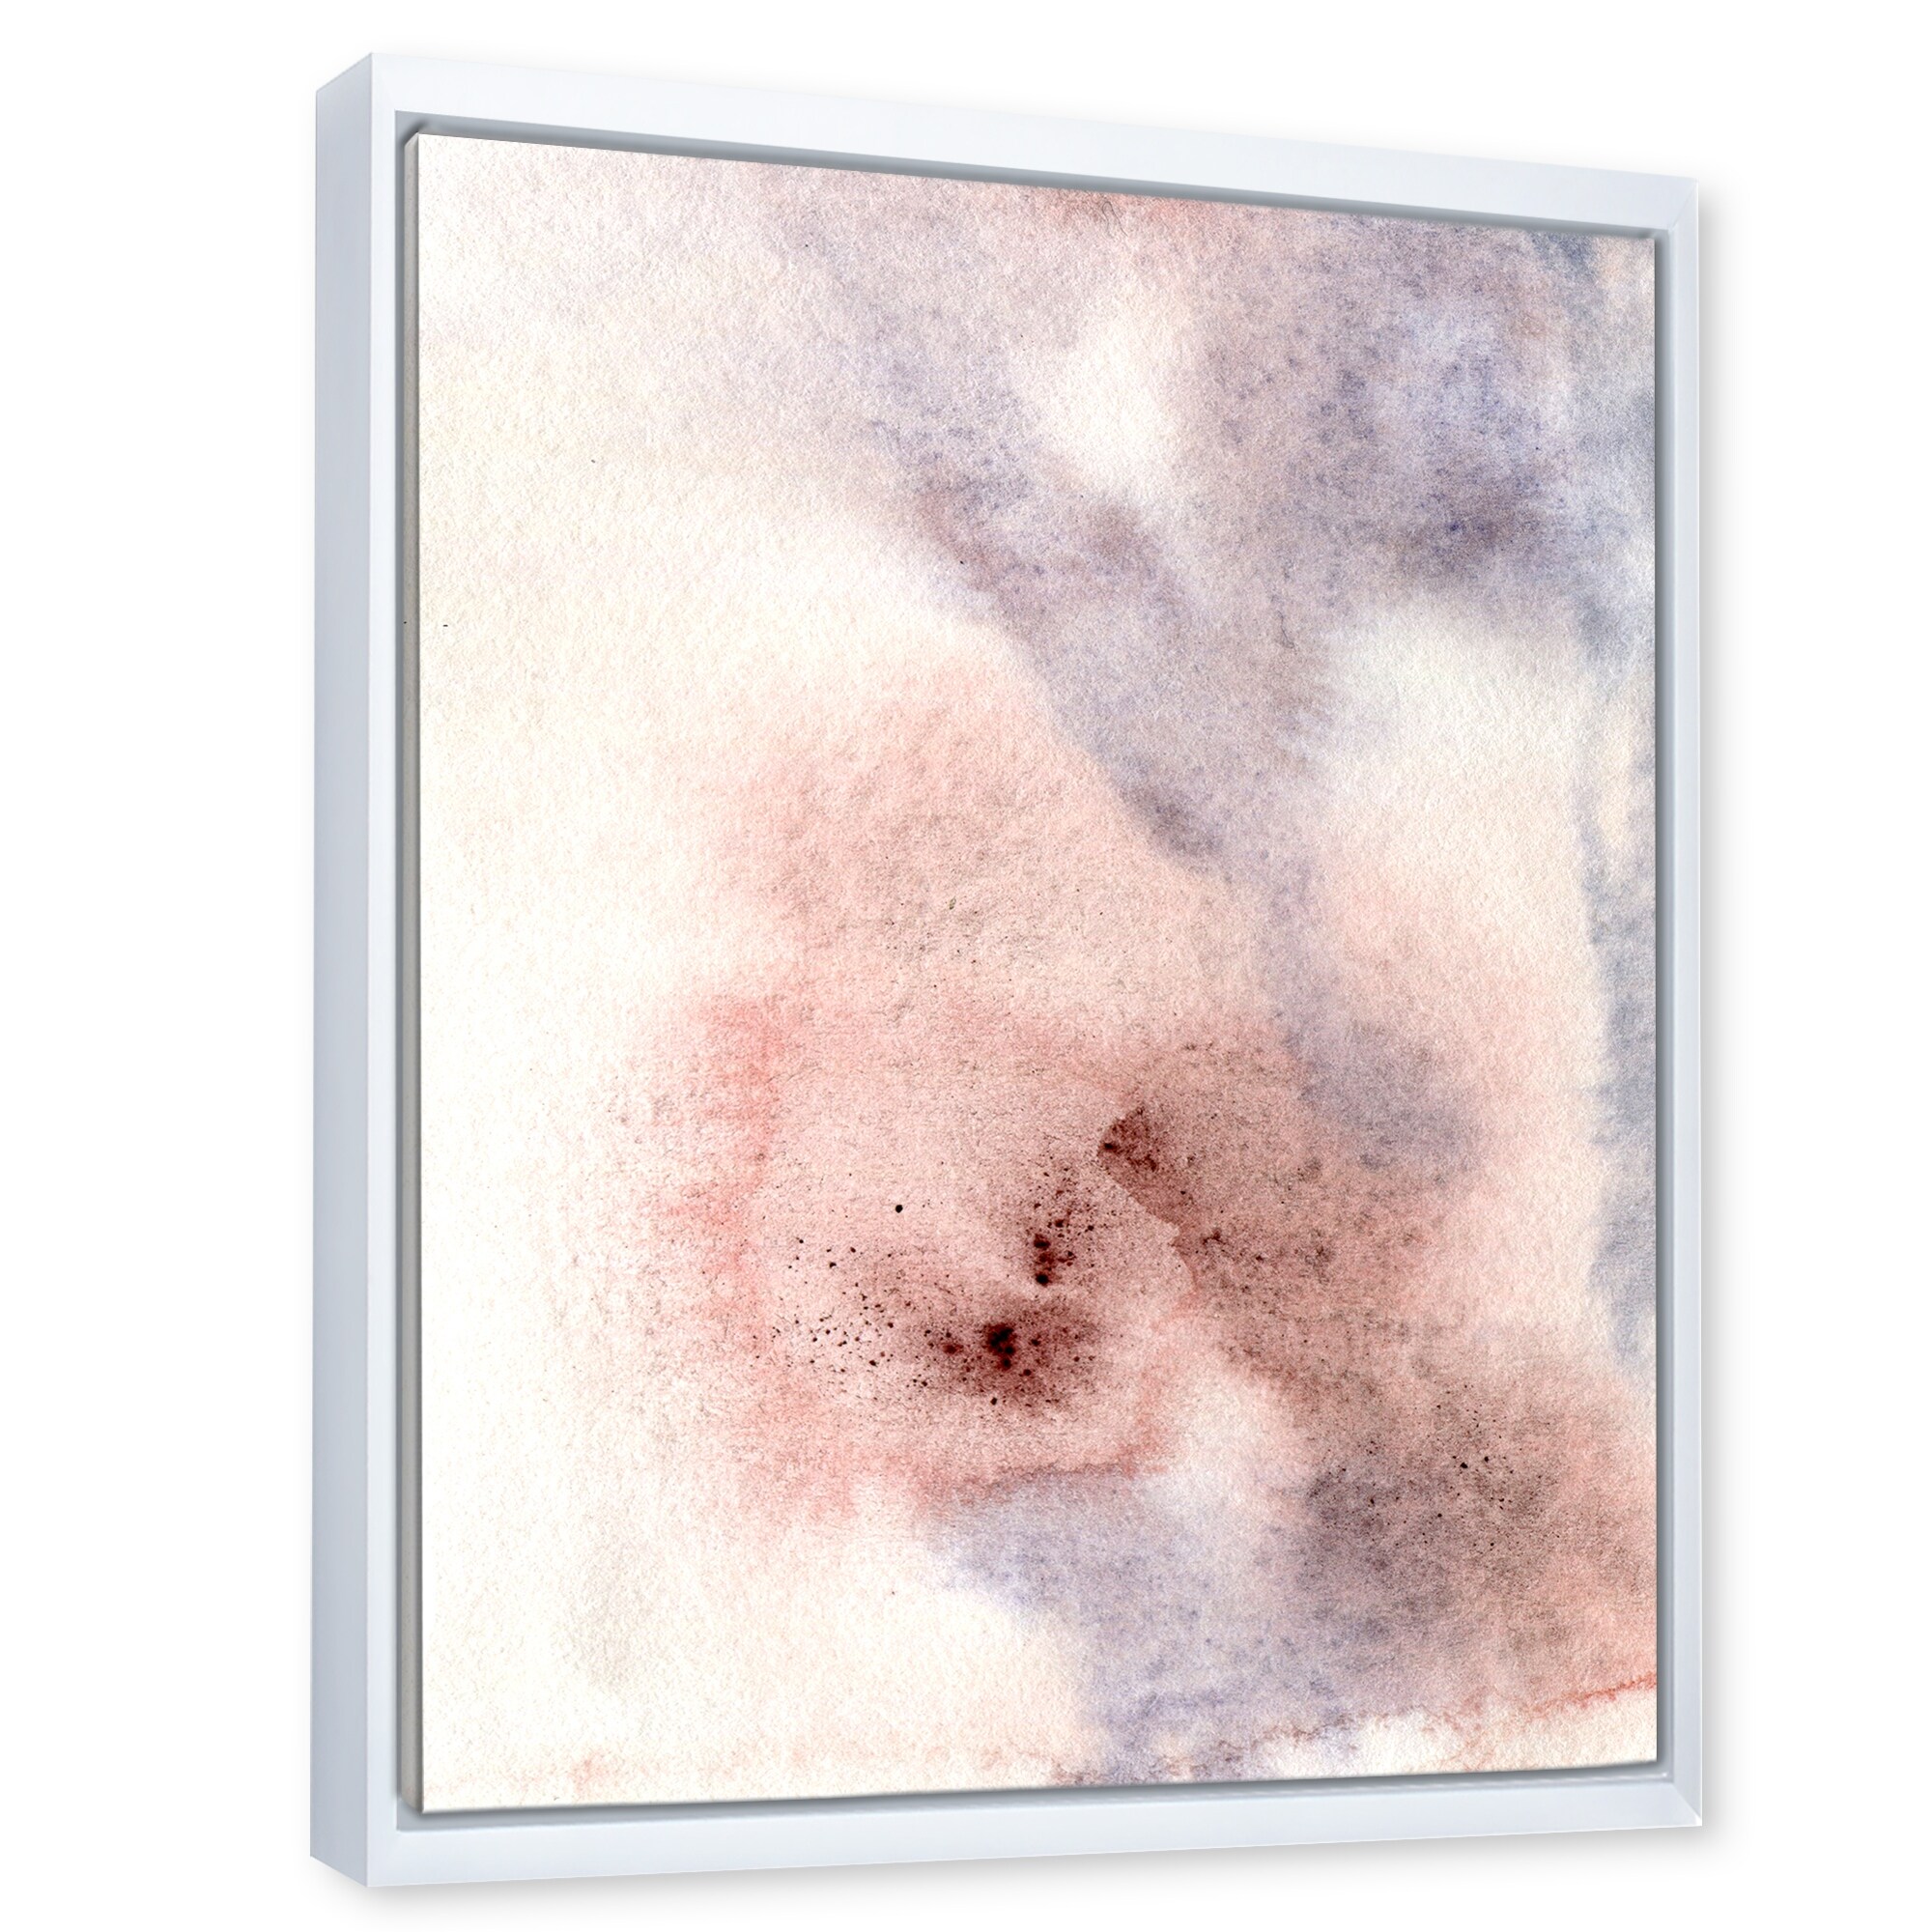 Framed Canvas - Bed Bath & Beyond